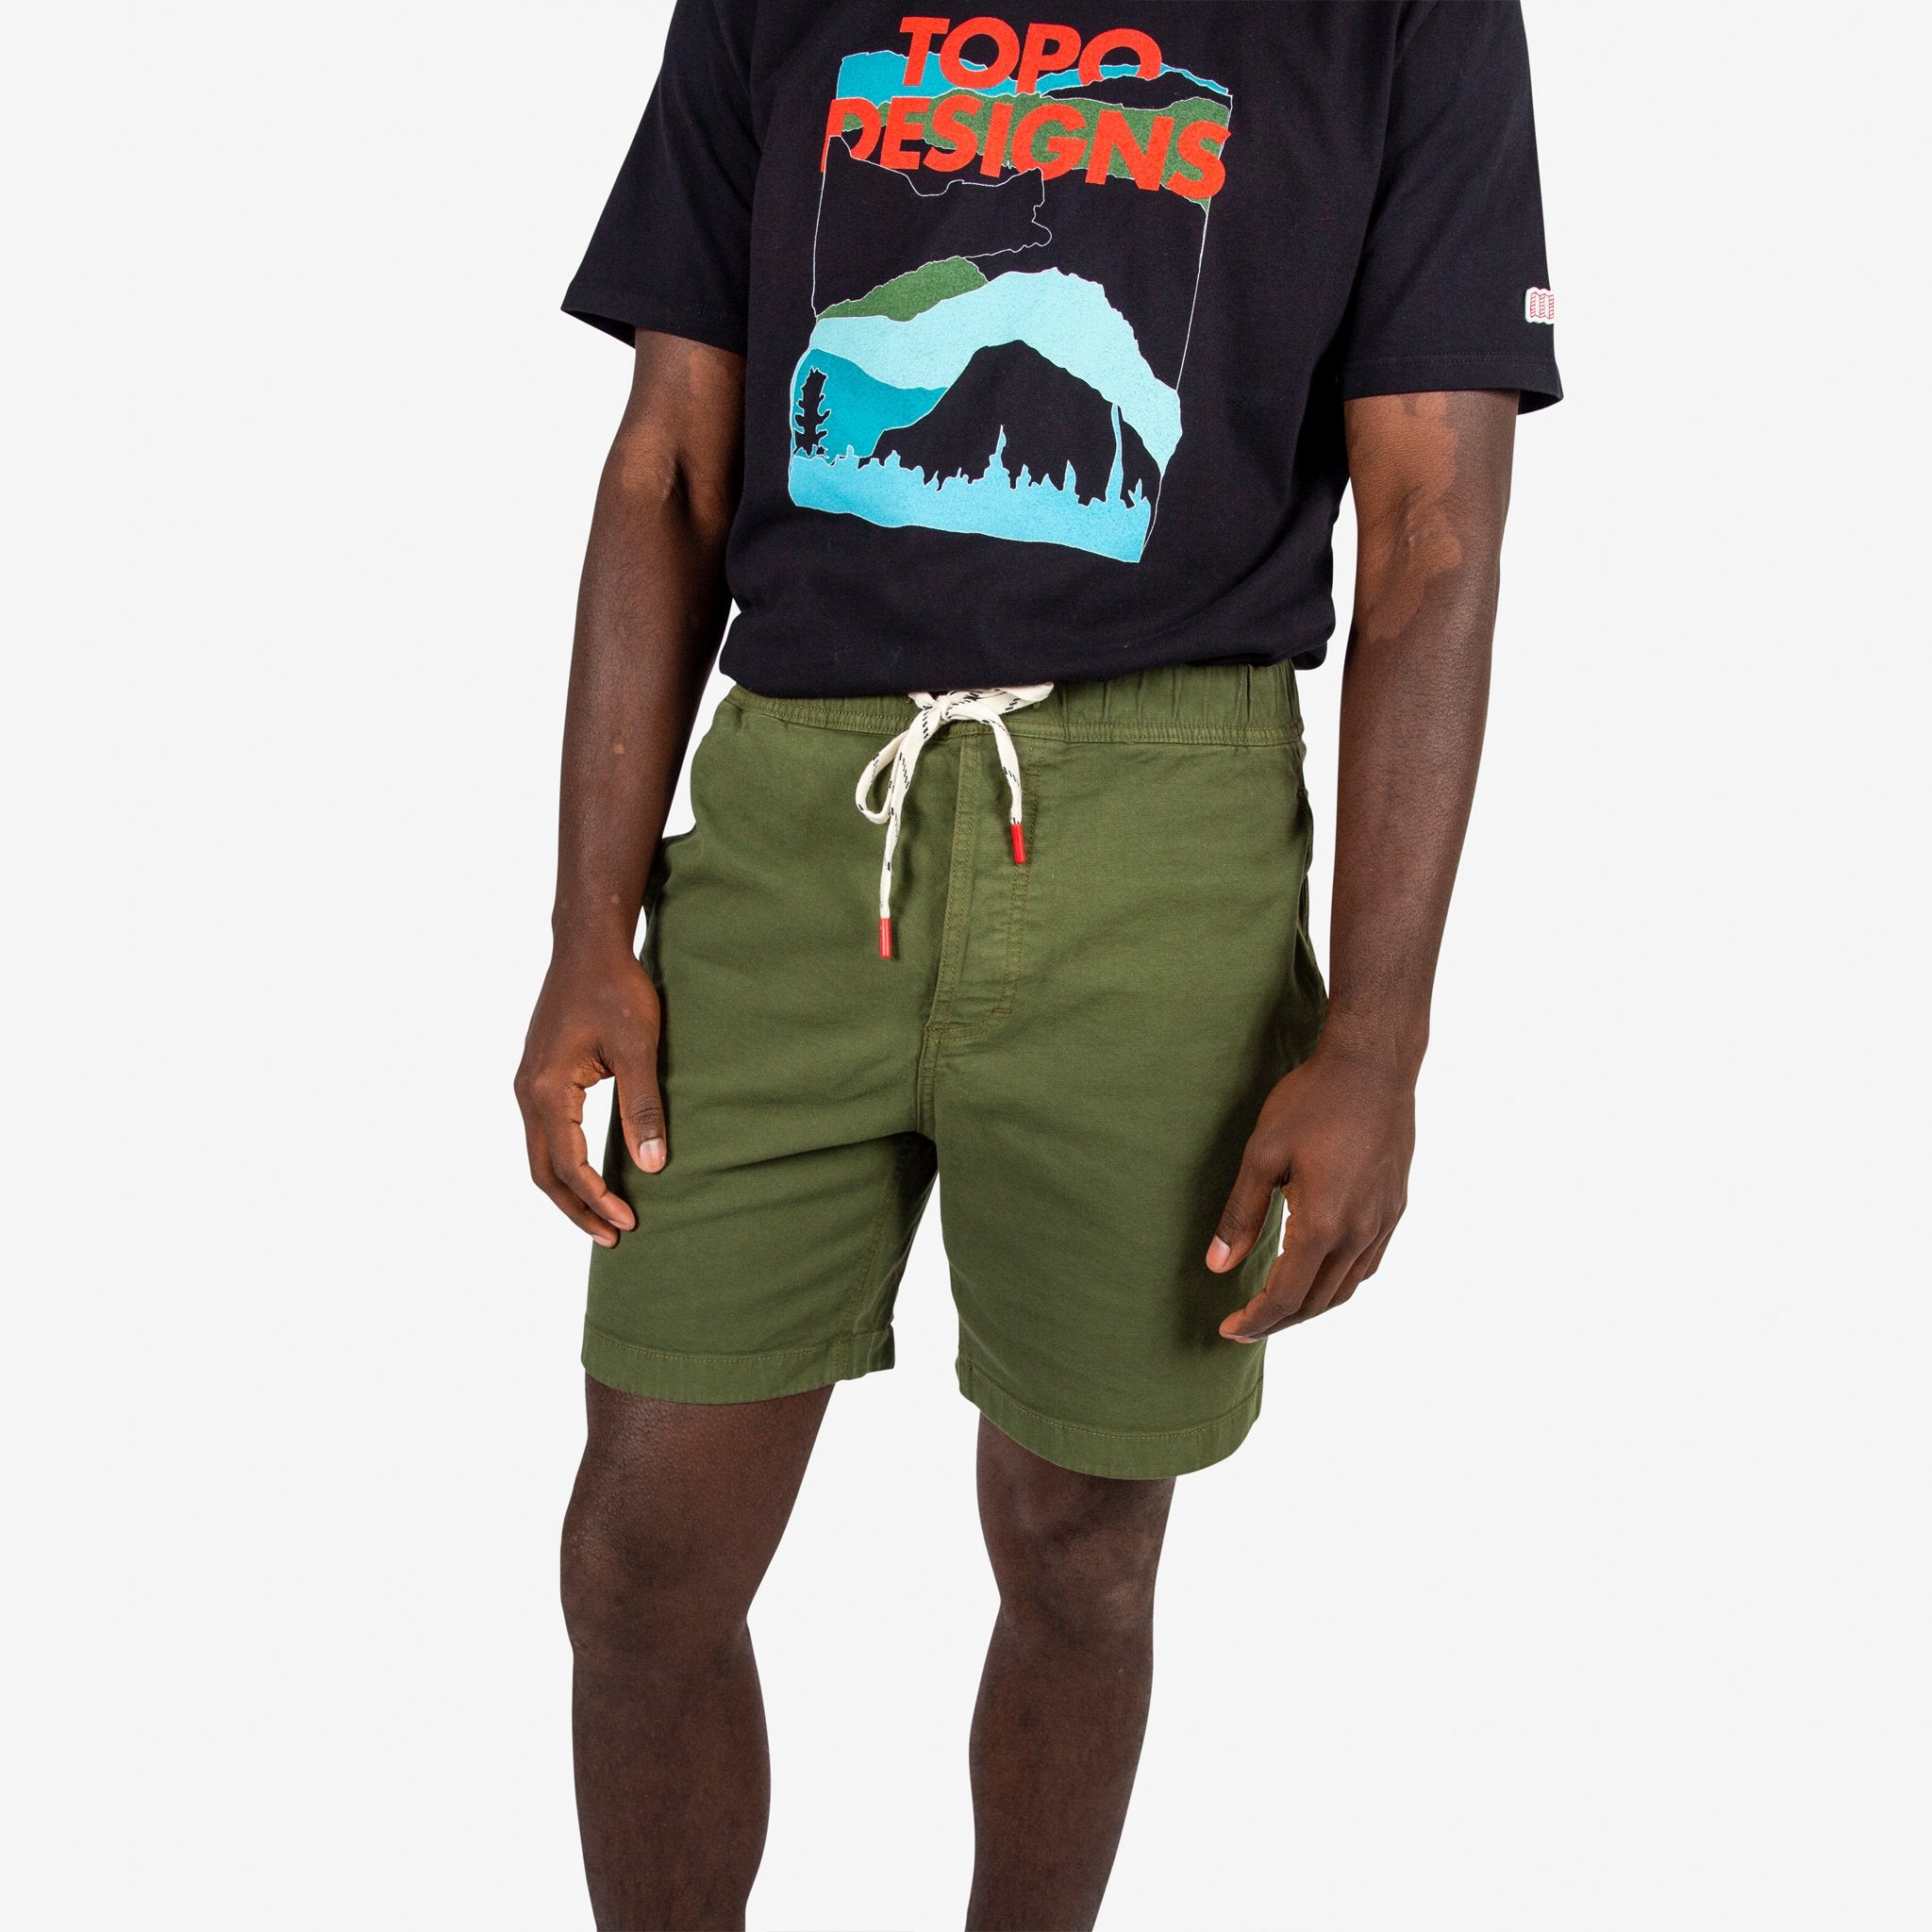 Topo Designs Men's drawstring Dirt Shorts in "Olive" green on model.